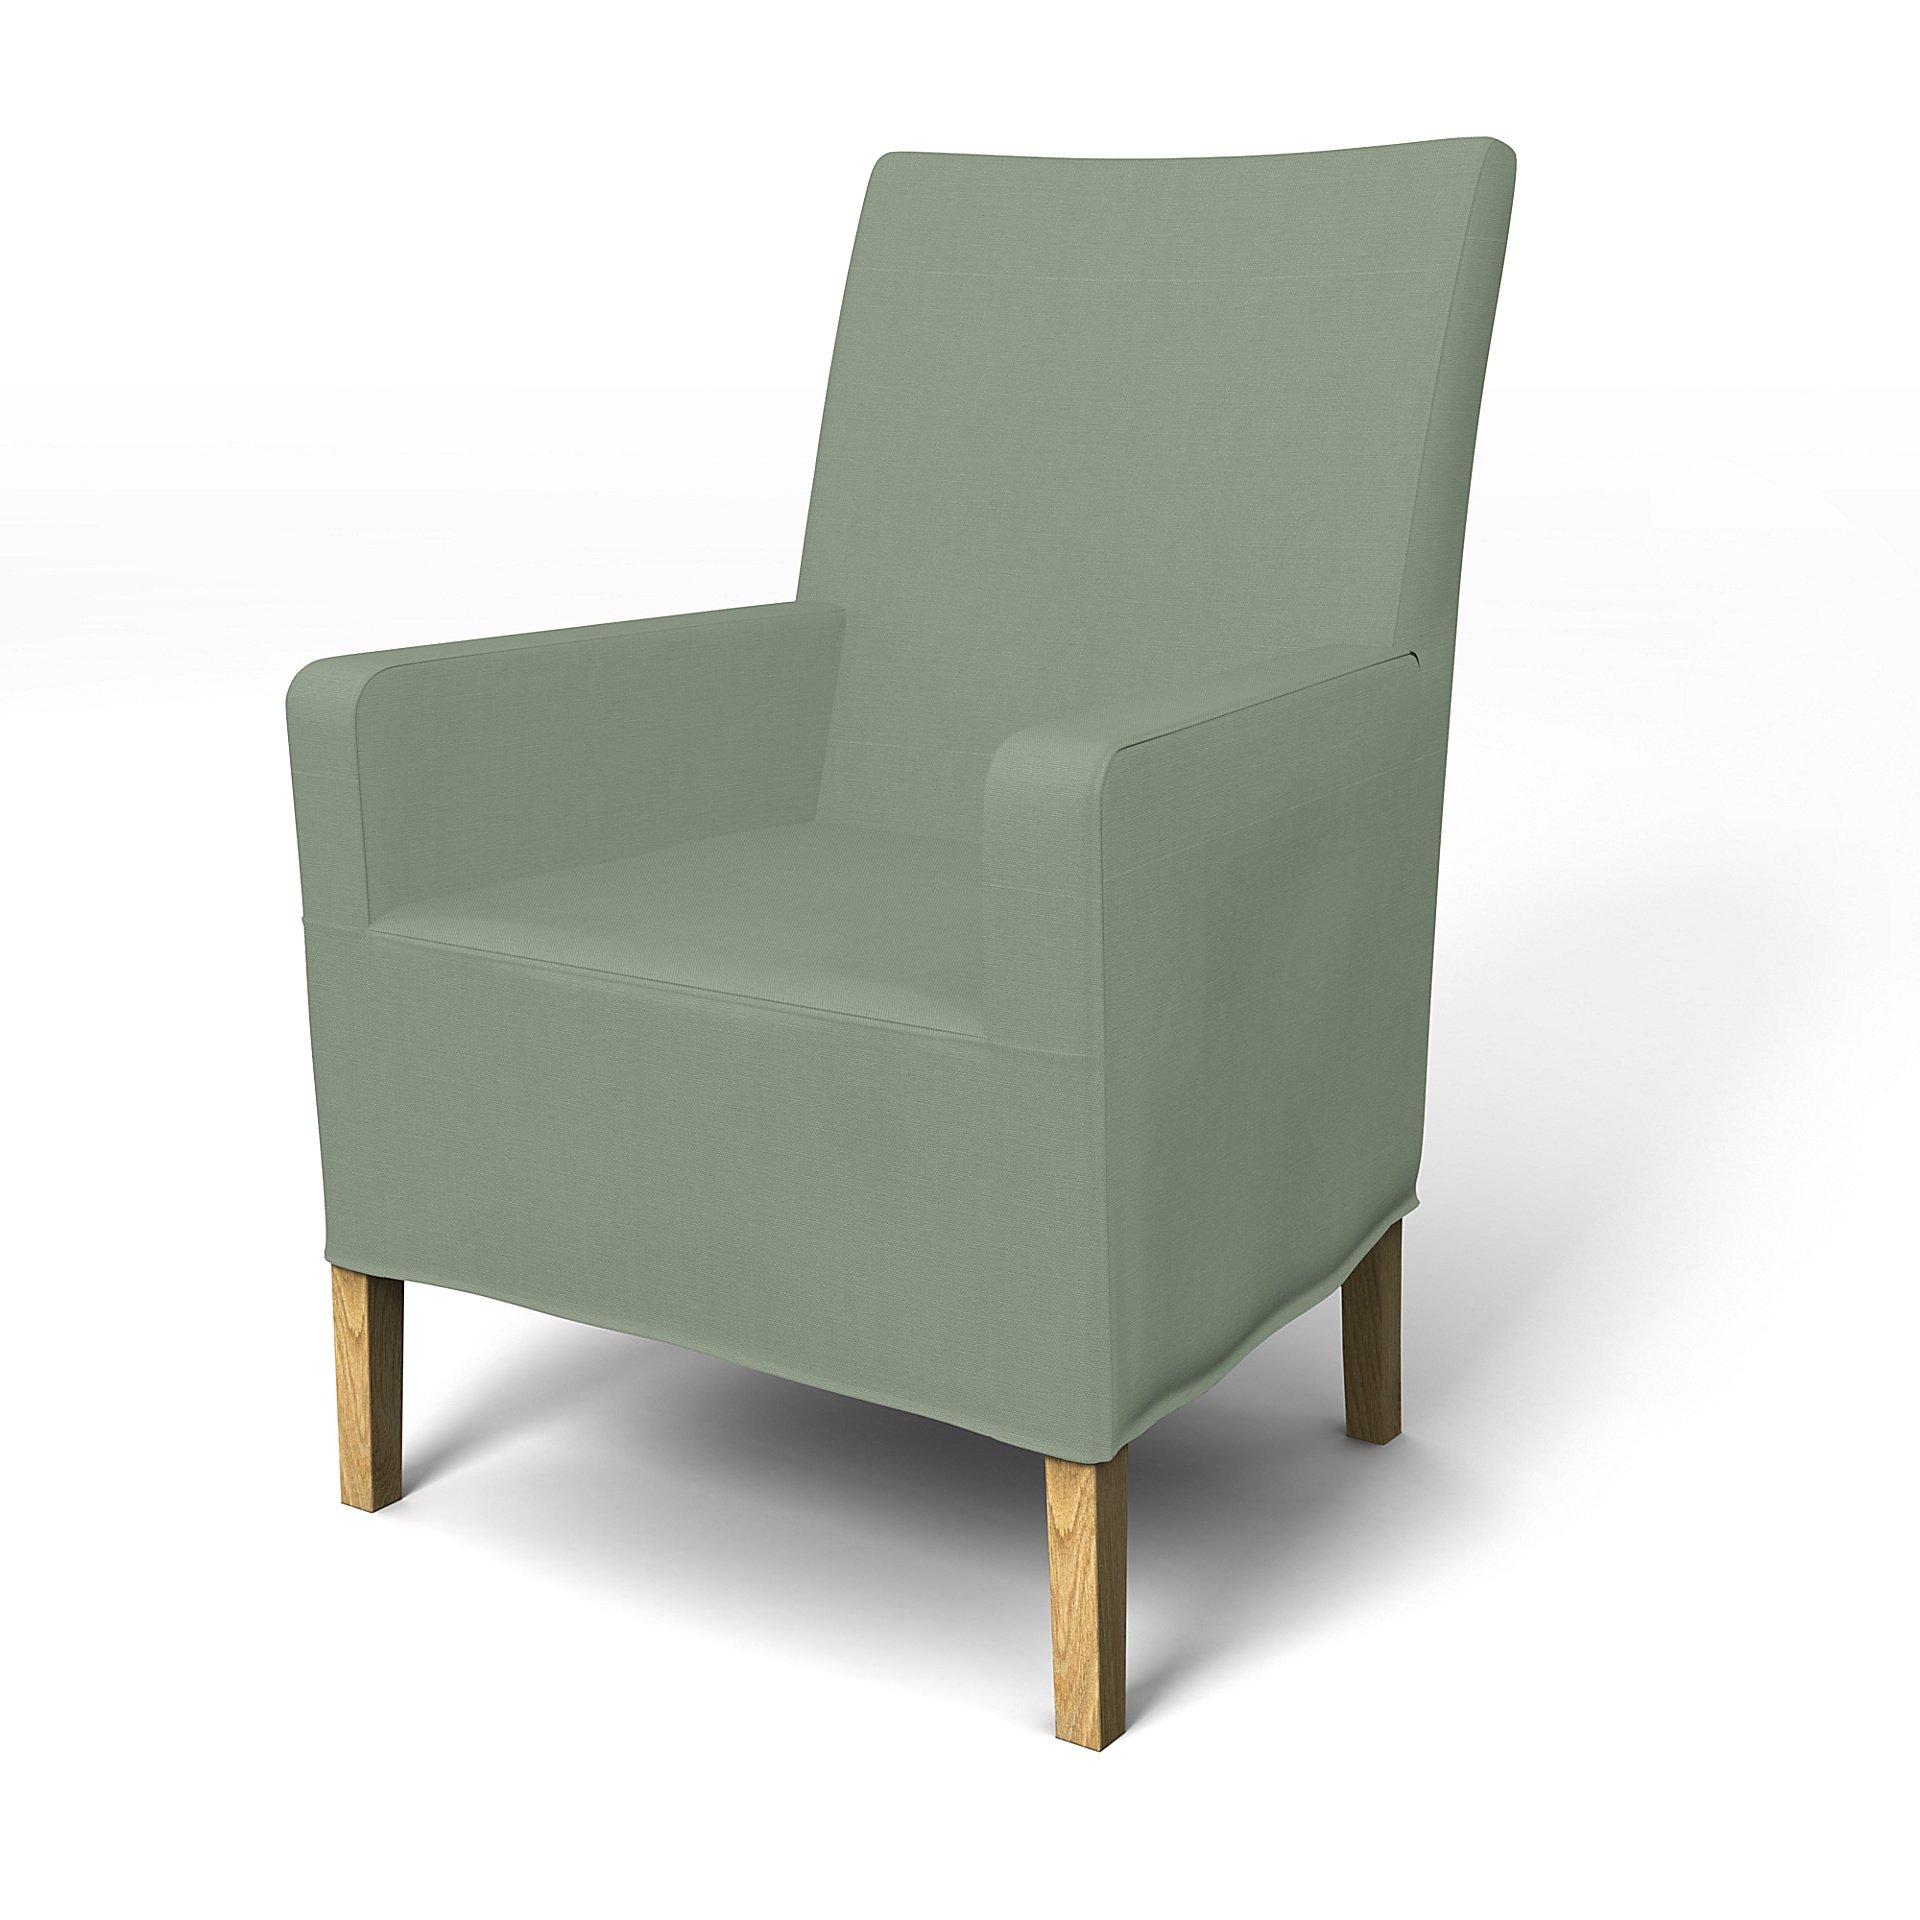 IKEA - Henriksdal, Chair cover w/ armrest, medium length skirt, Seagrass, Cotton - Bemz